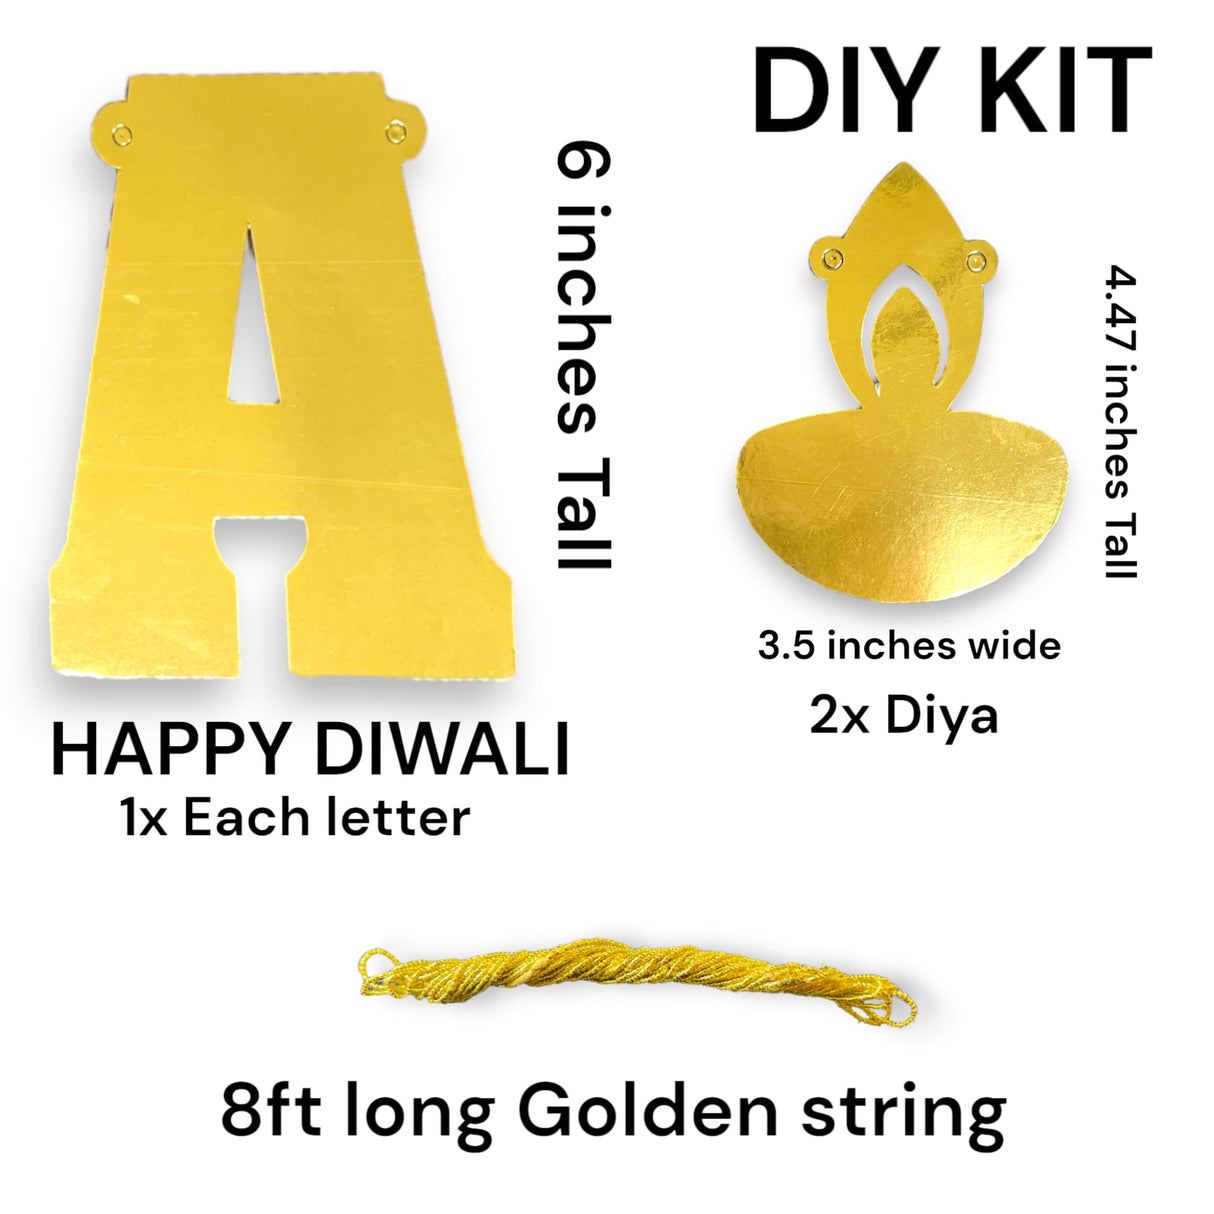 Diy kit golden happy diwali banner decor decorations party